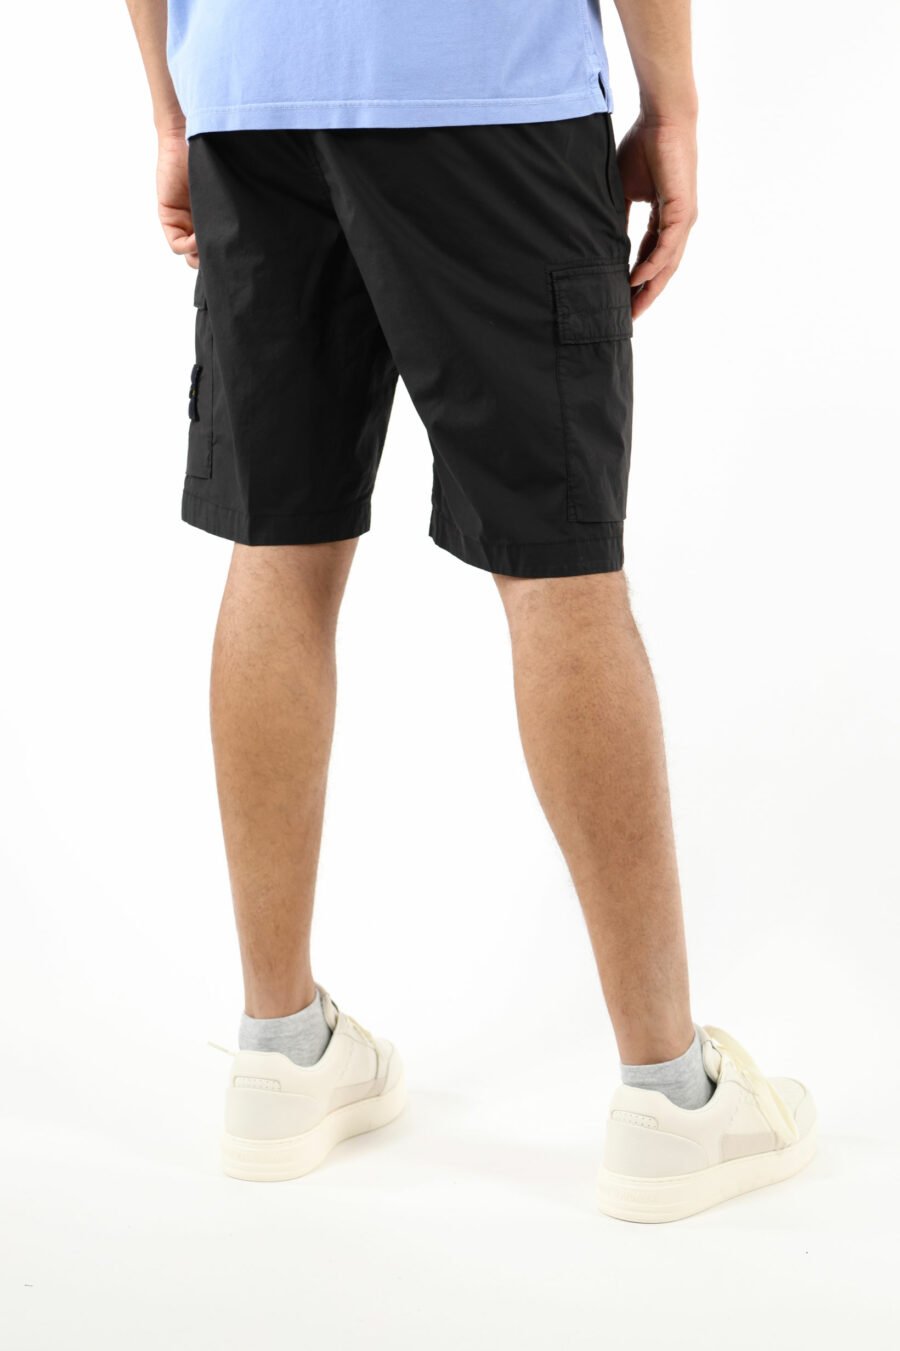 Pantalón corto negro estilo cargo con logo parche brújula - 111389